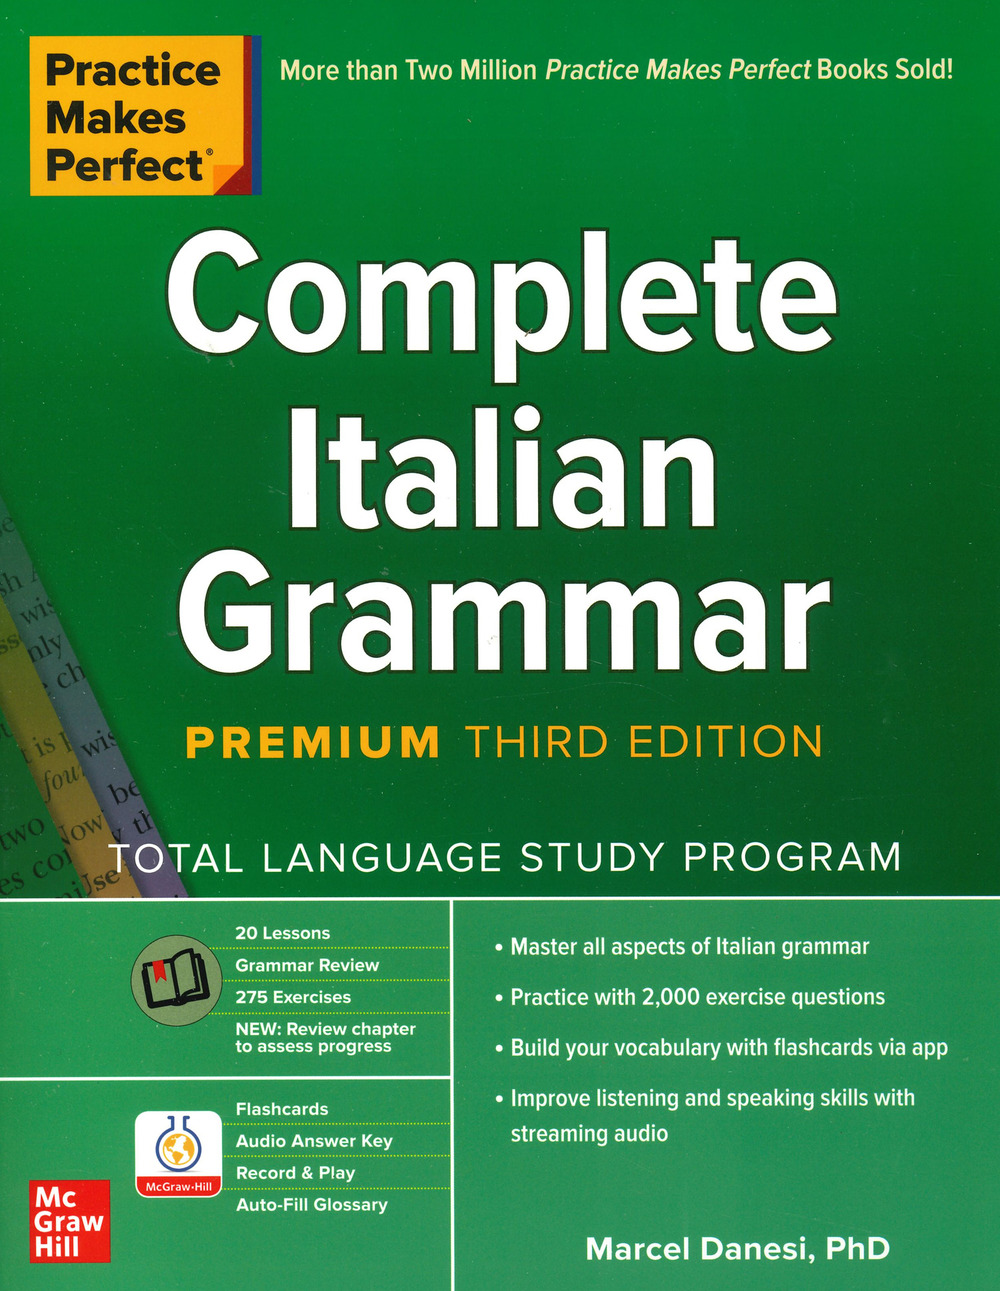 Practice makes perfect. Complete Italian grammar